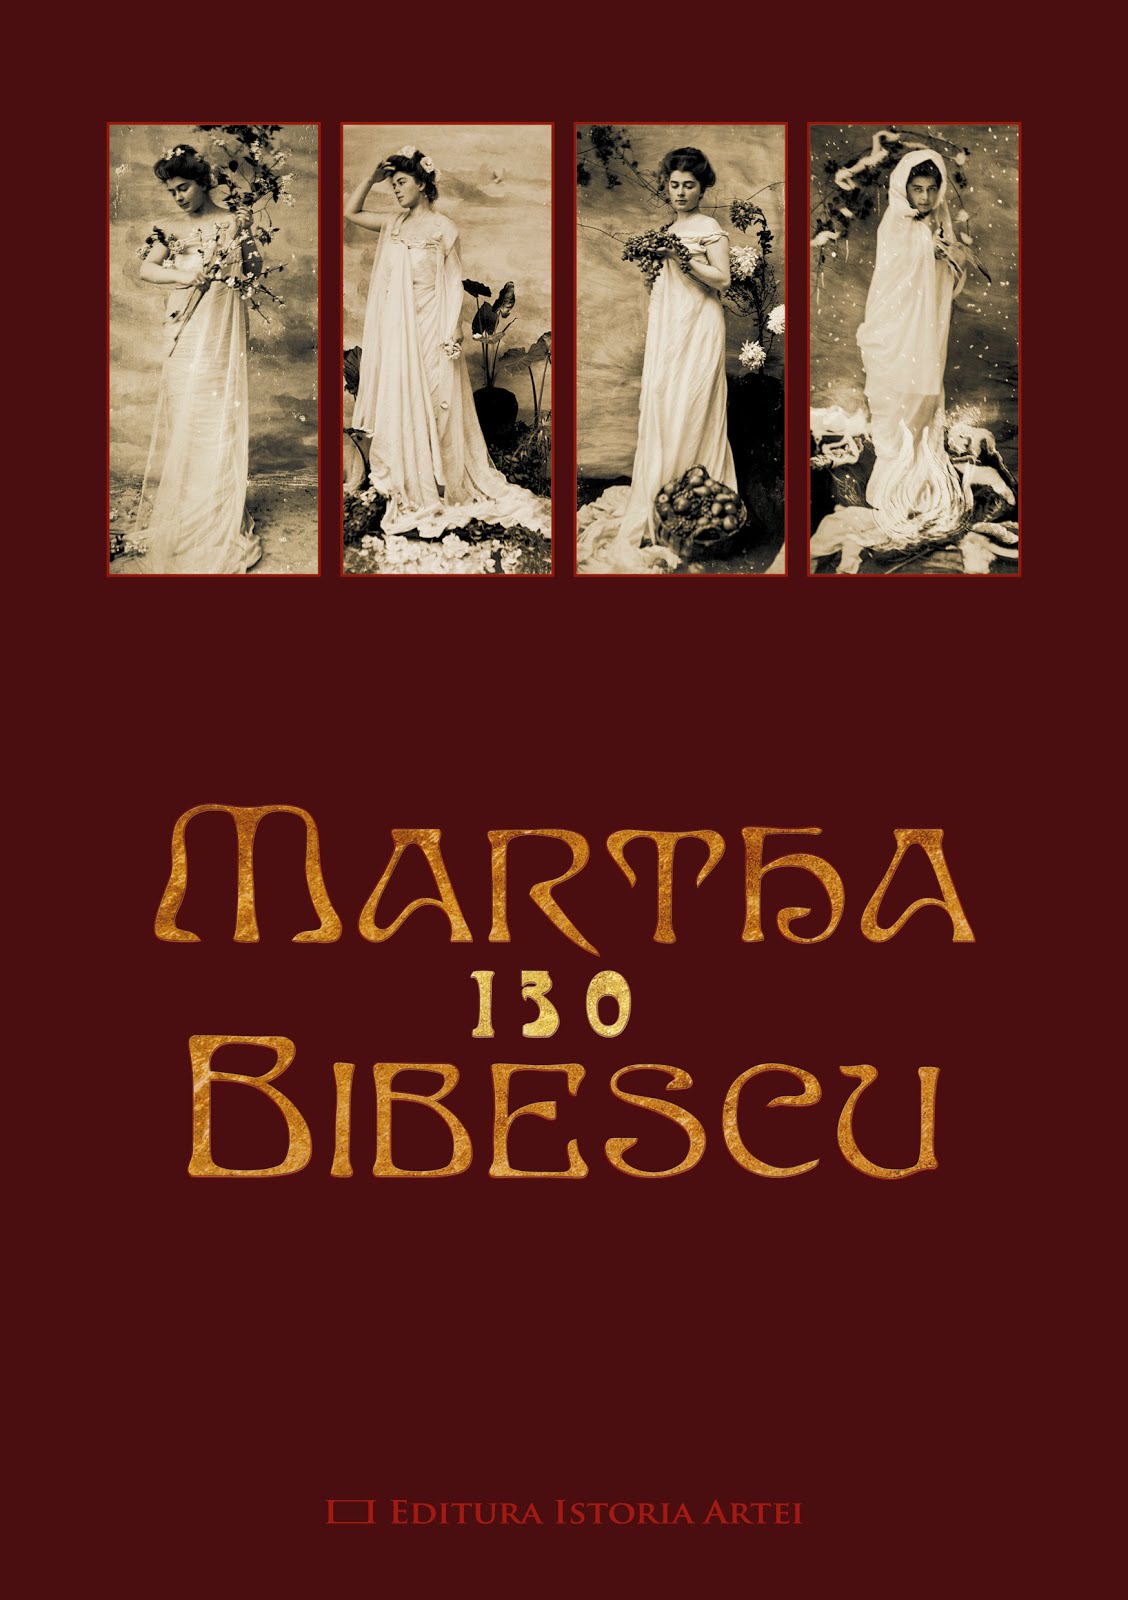 Catalog expoziție Martha Bibescu 130